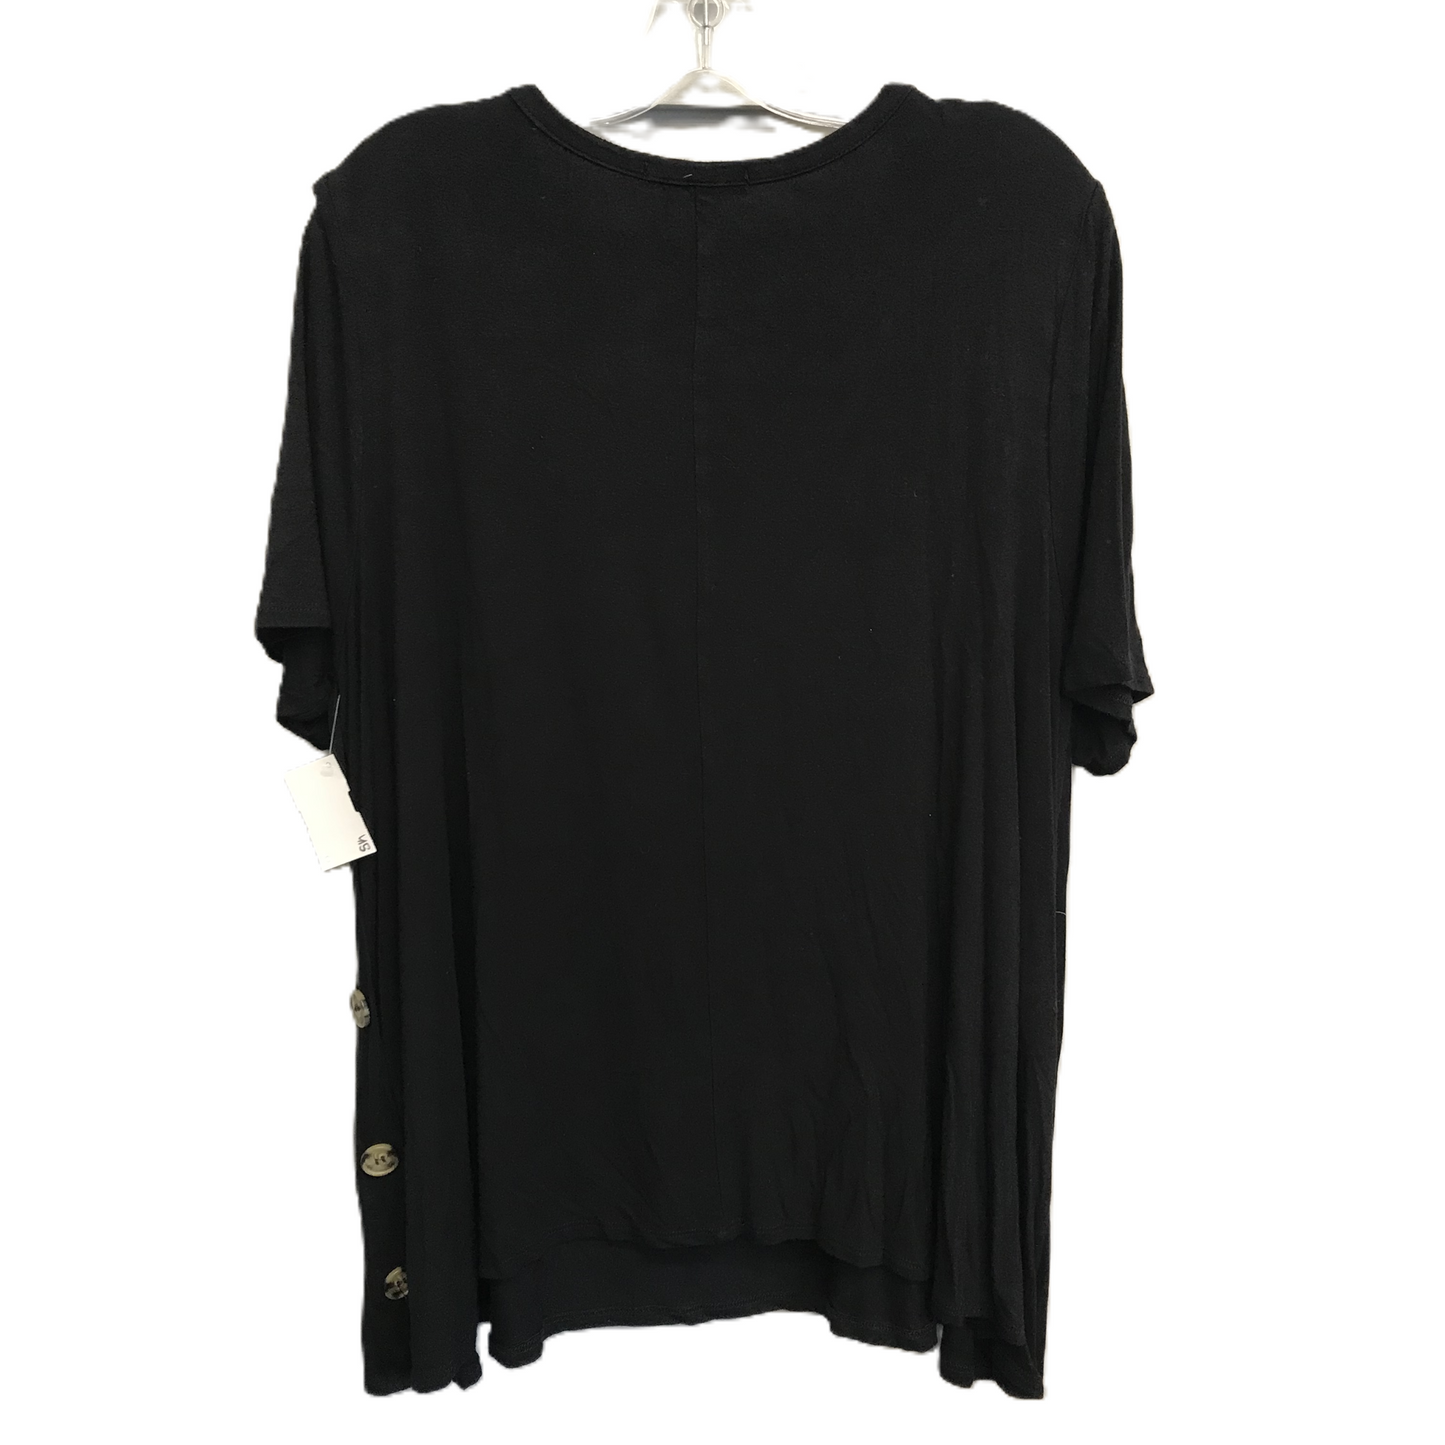 Black Top Short Sleeve Basic By Kim & Cami, Size: 2x